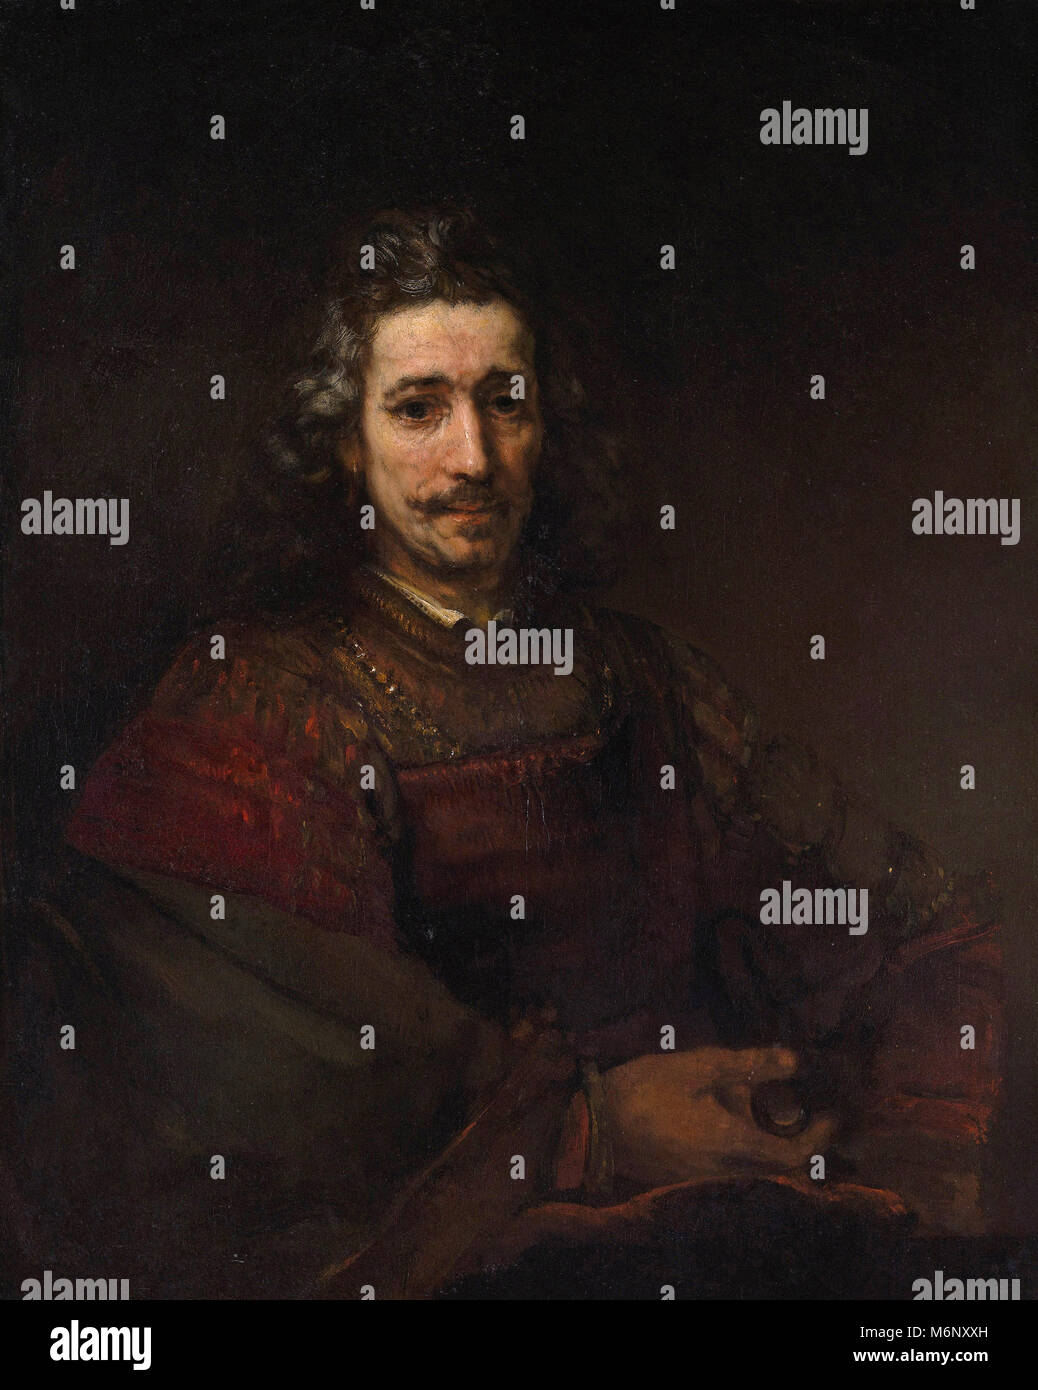 Rembrandt Harmenszoon van Rijn - Hombre con una lupa Foto de stock